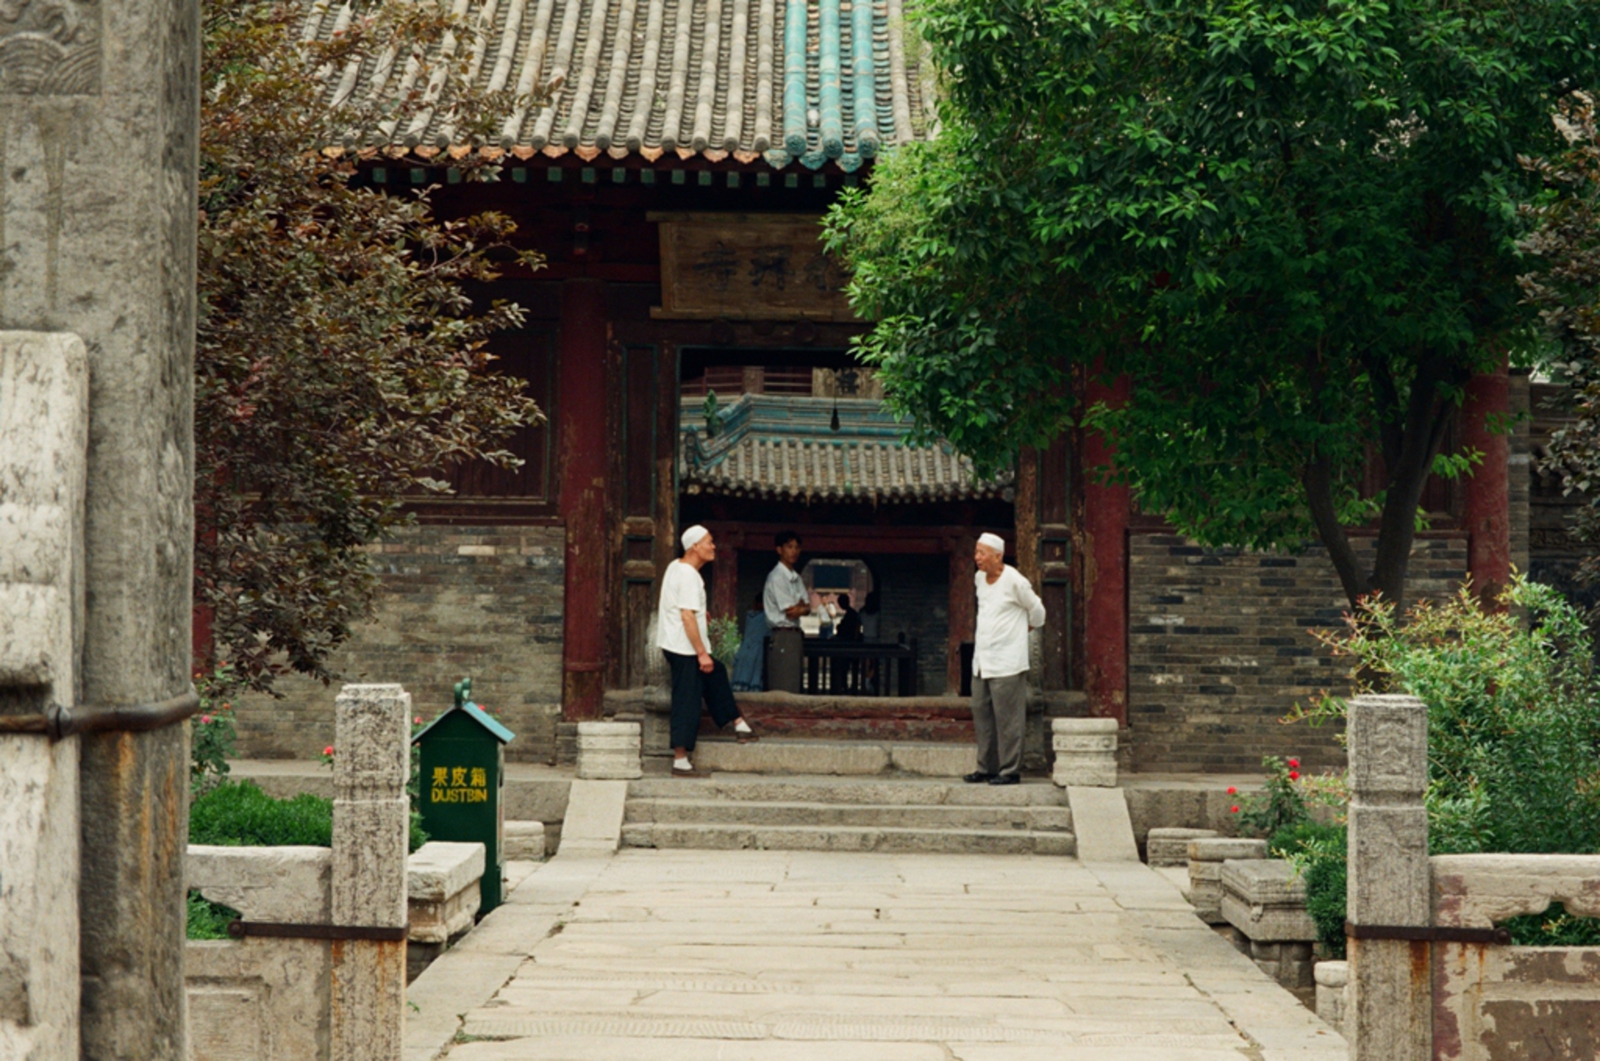 Xi'an: Moskee uit de 8e eeuw